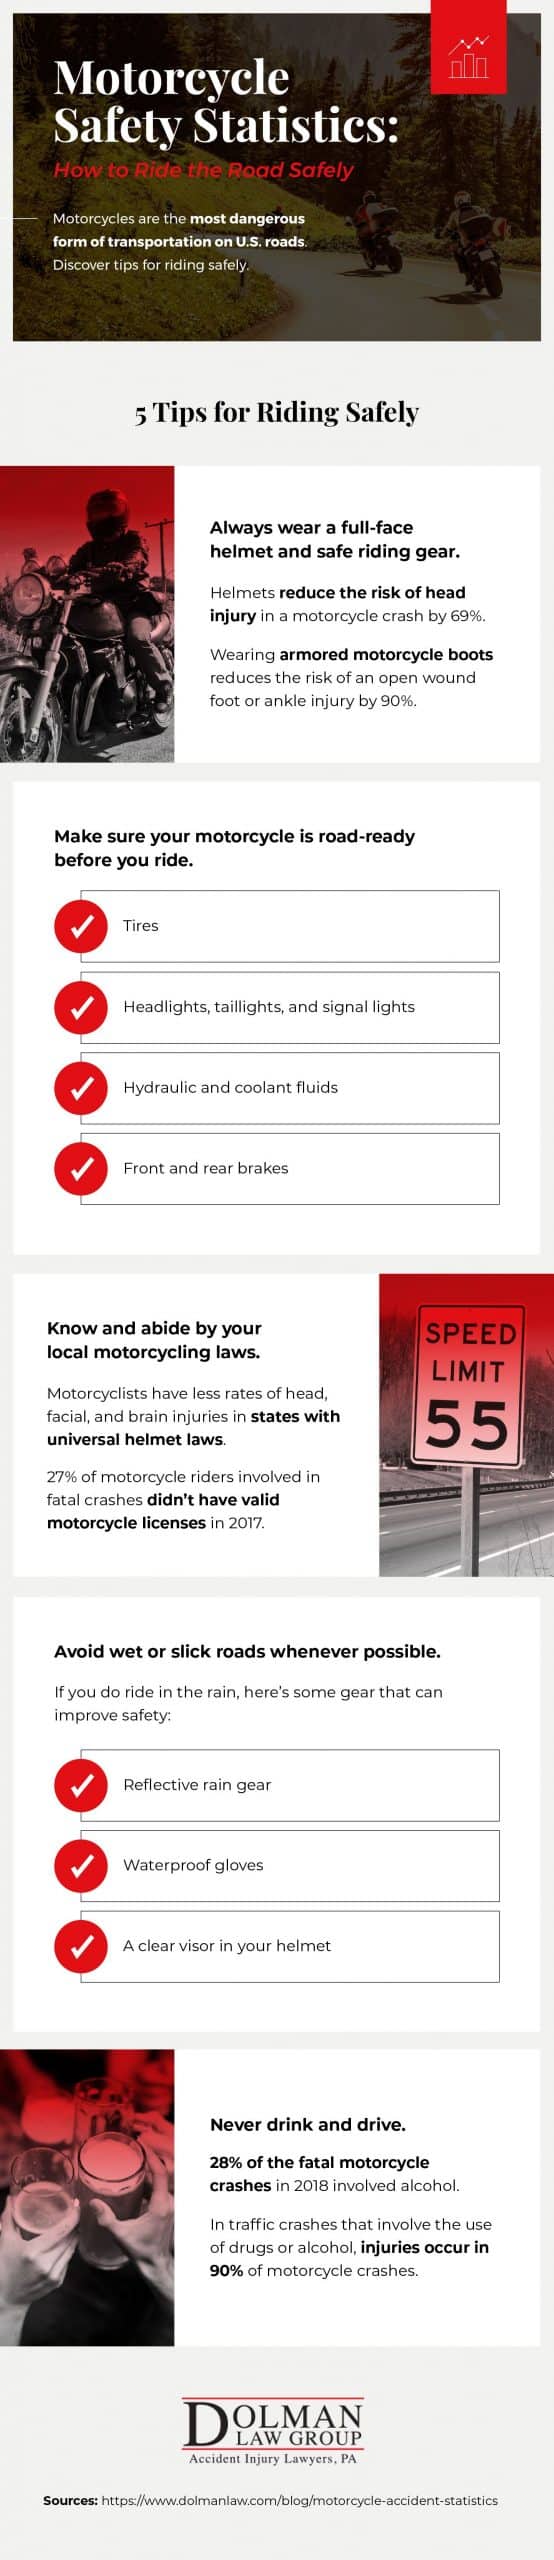 Motorcycle safety statistics